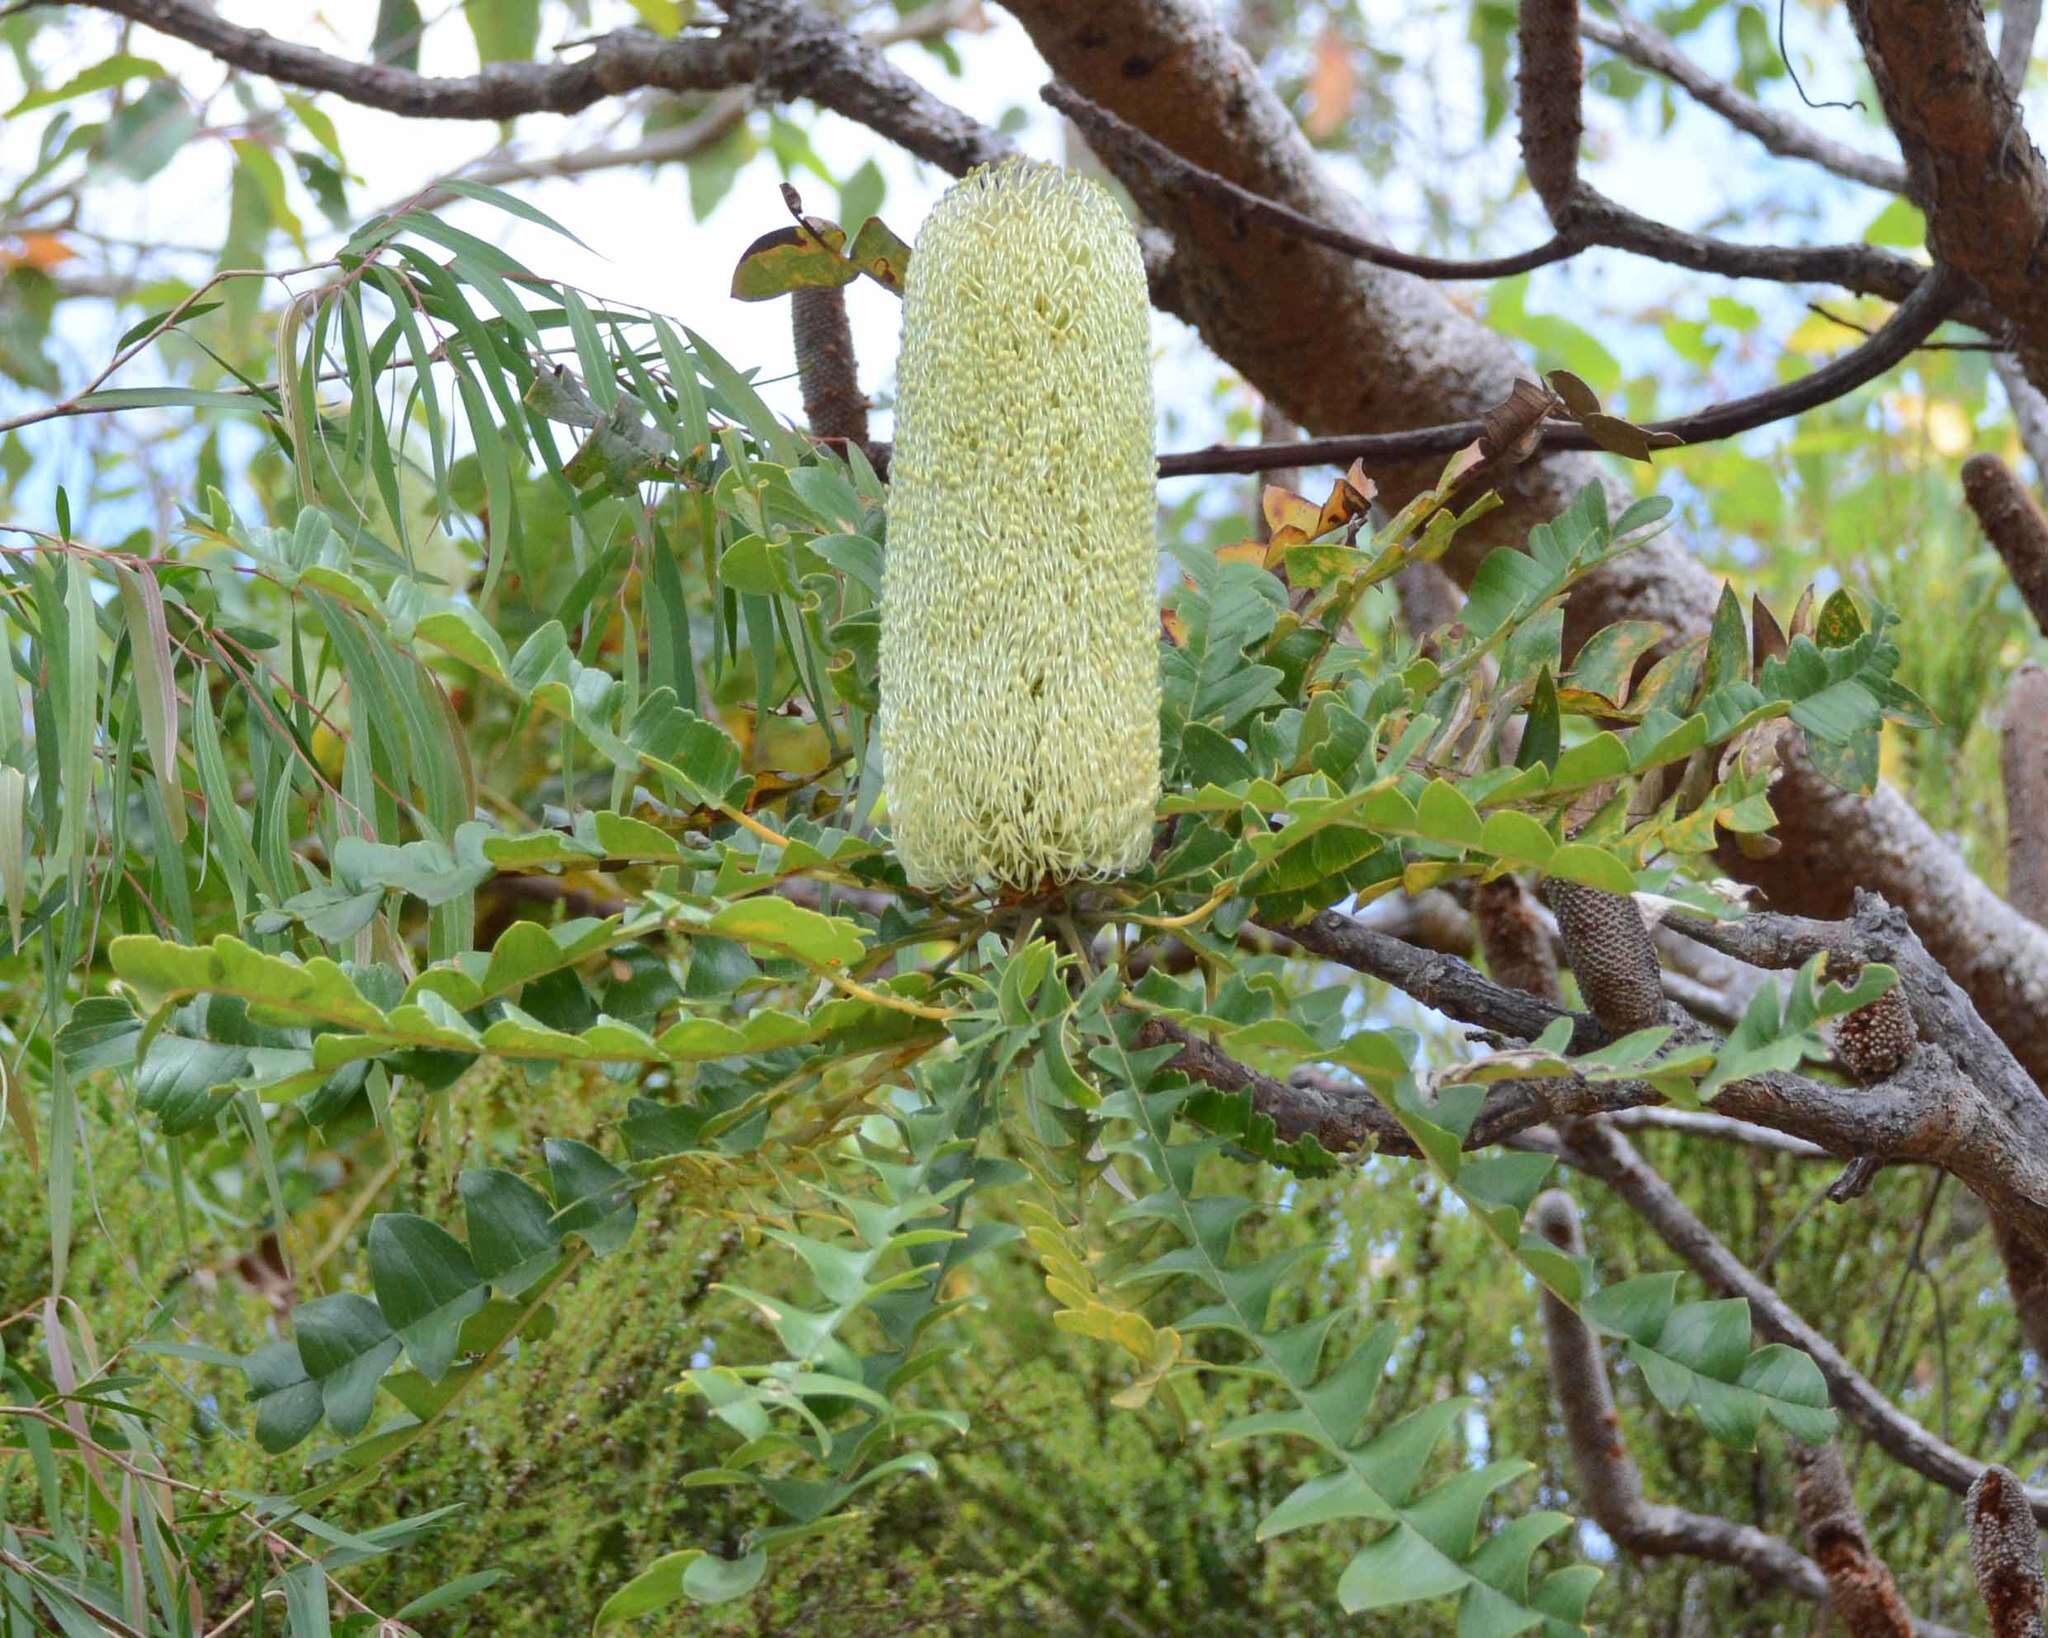 Image de Banksia grandis Willd.